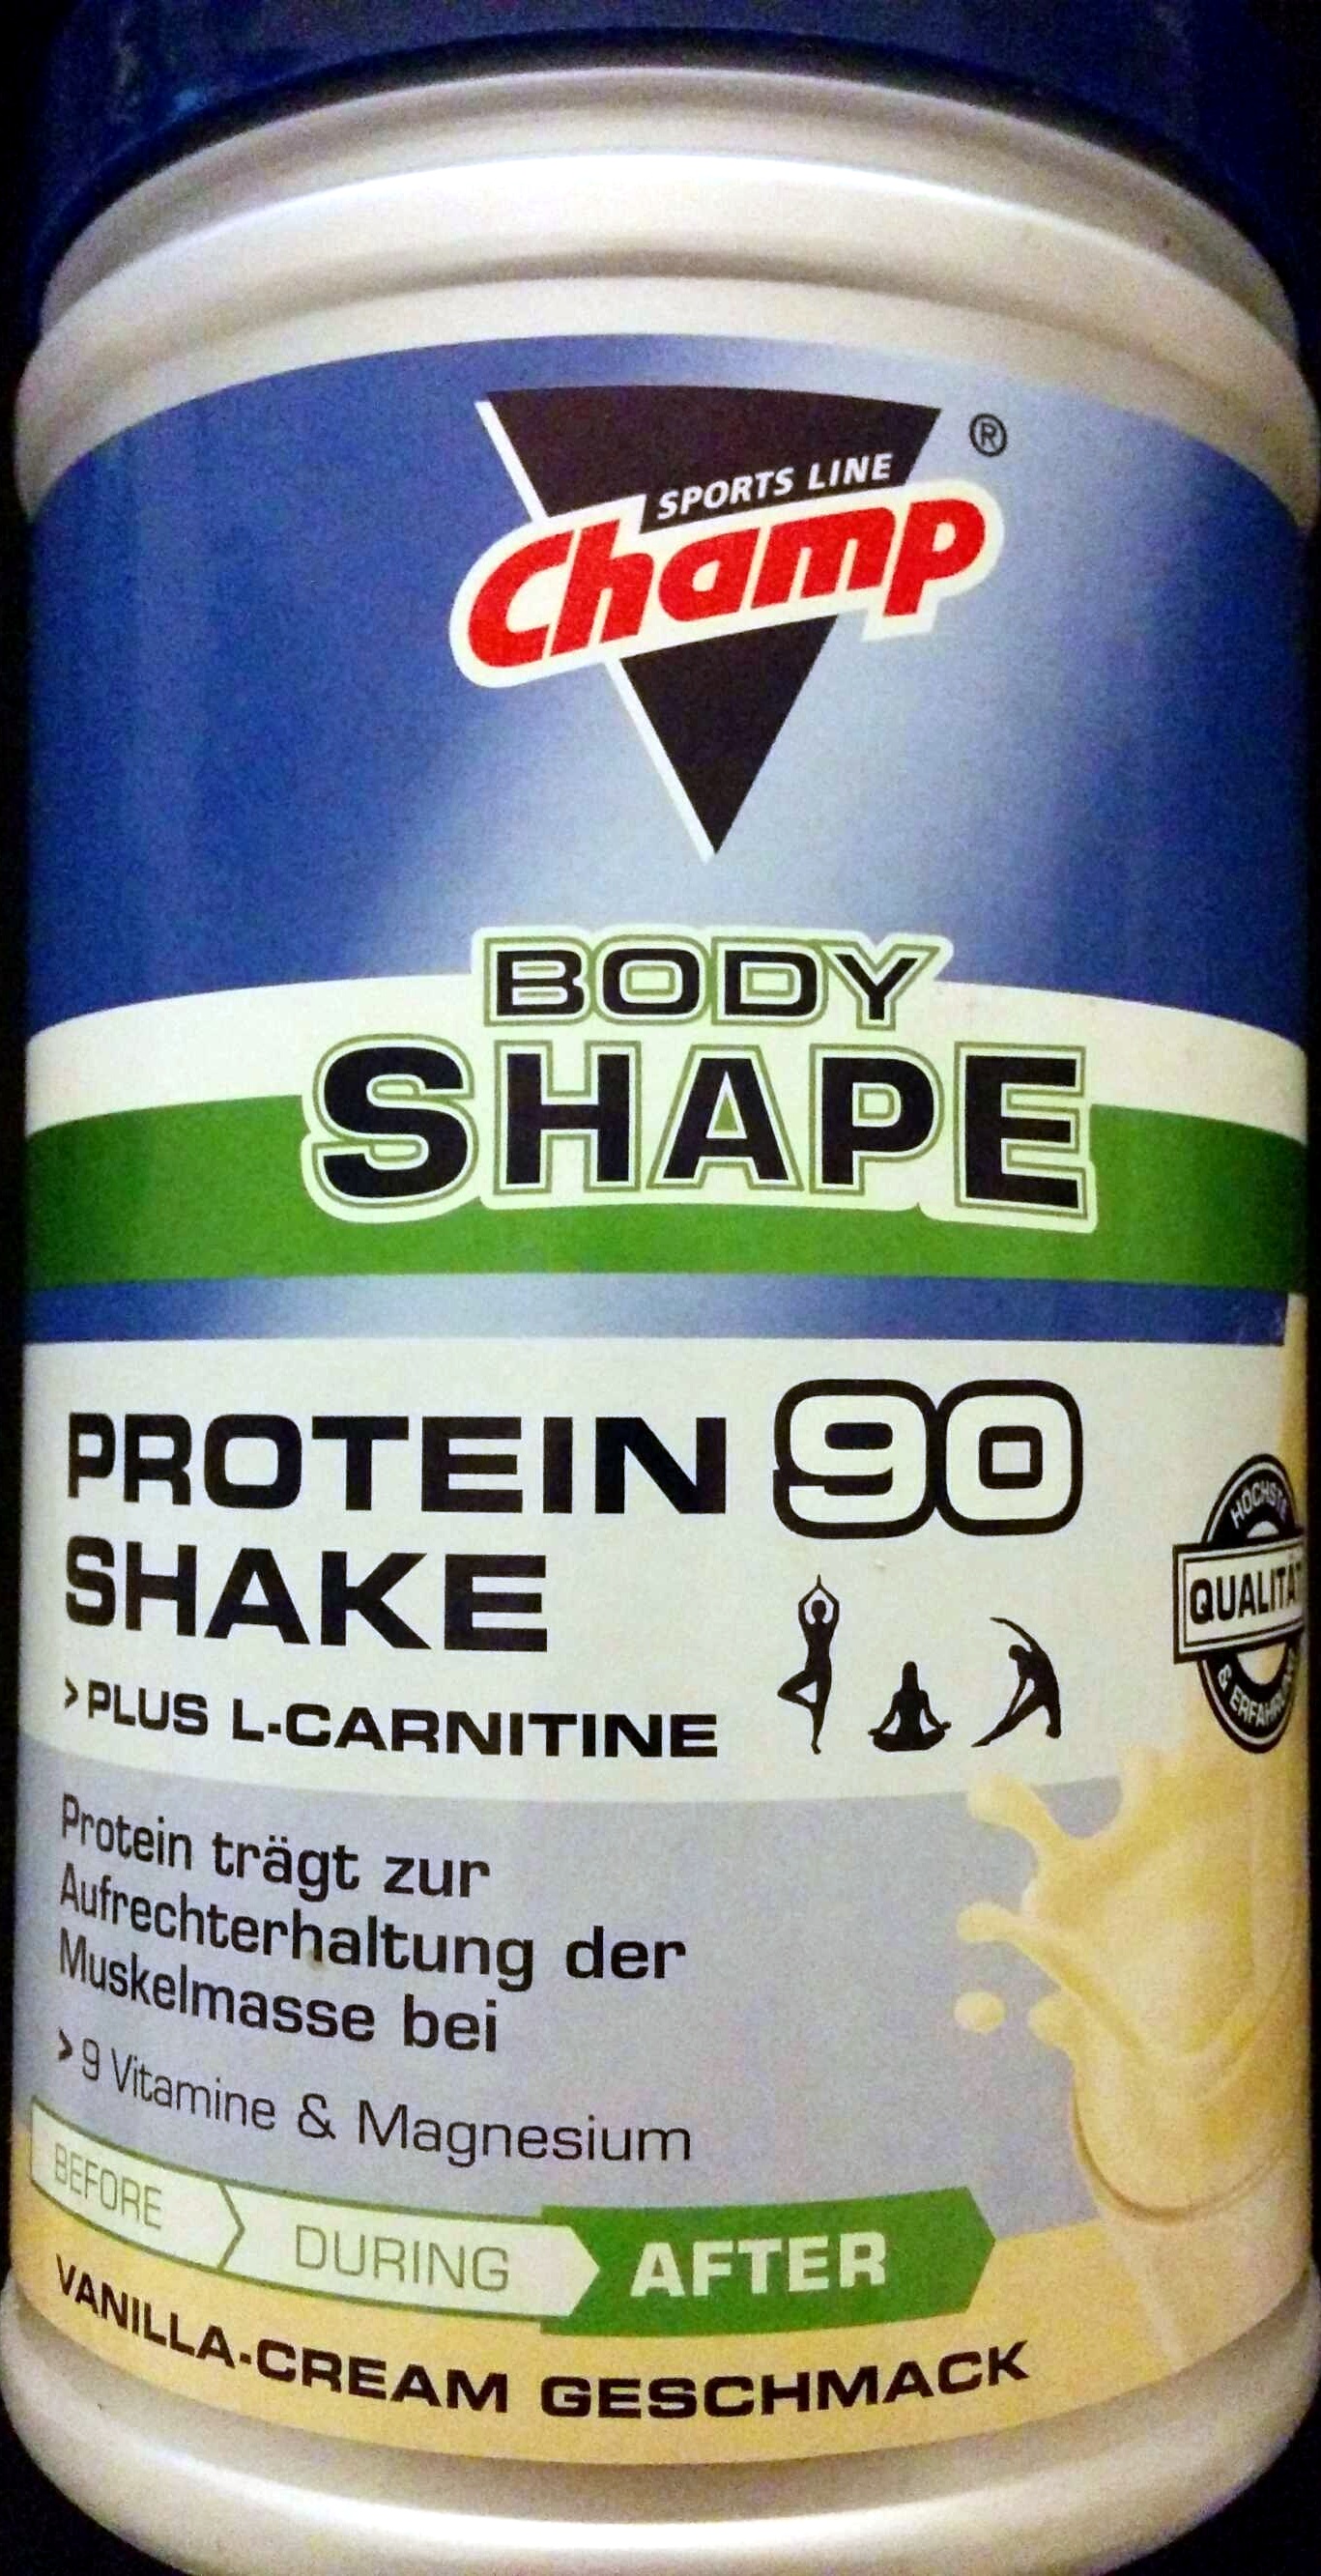 Body Shape Protein Shake 90 Plus L-Carnitine - Produkt - de